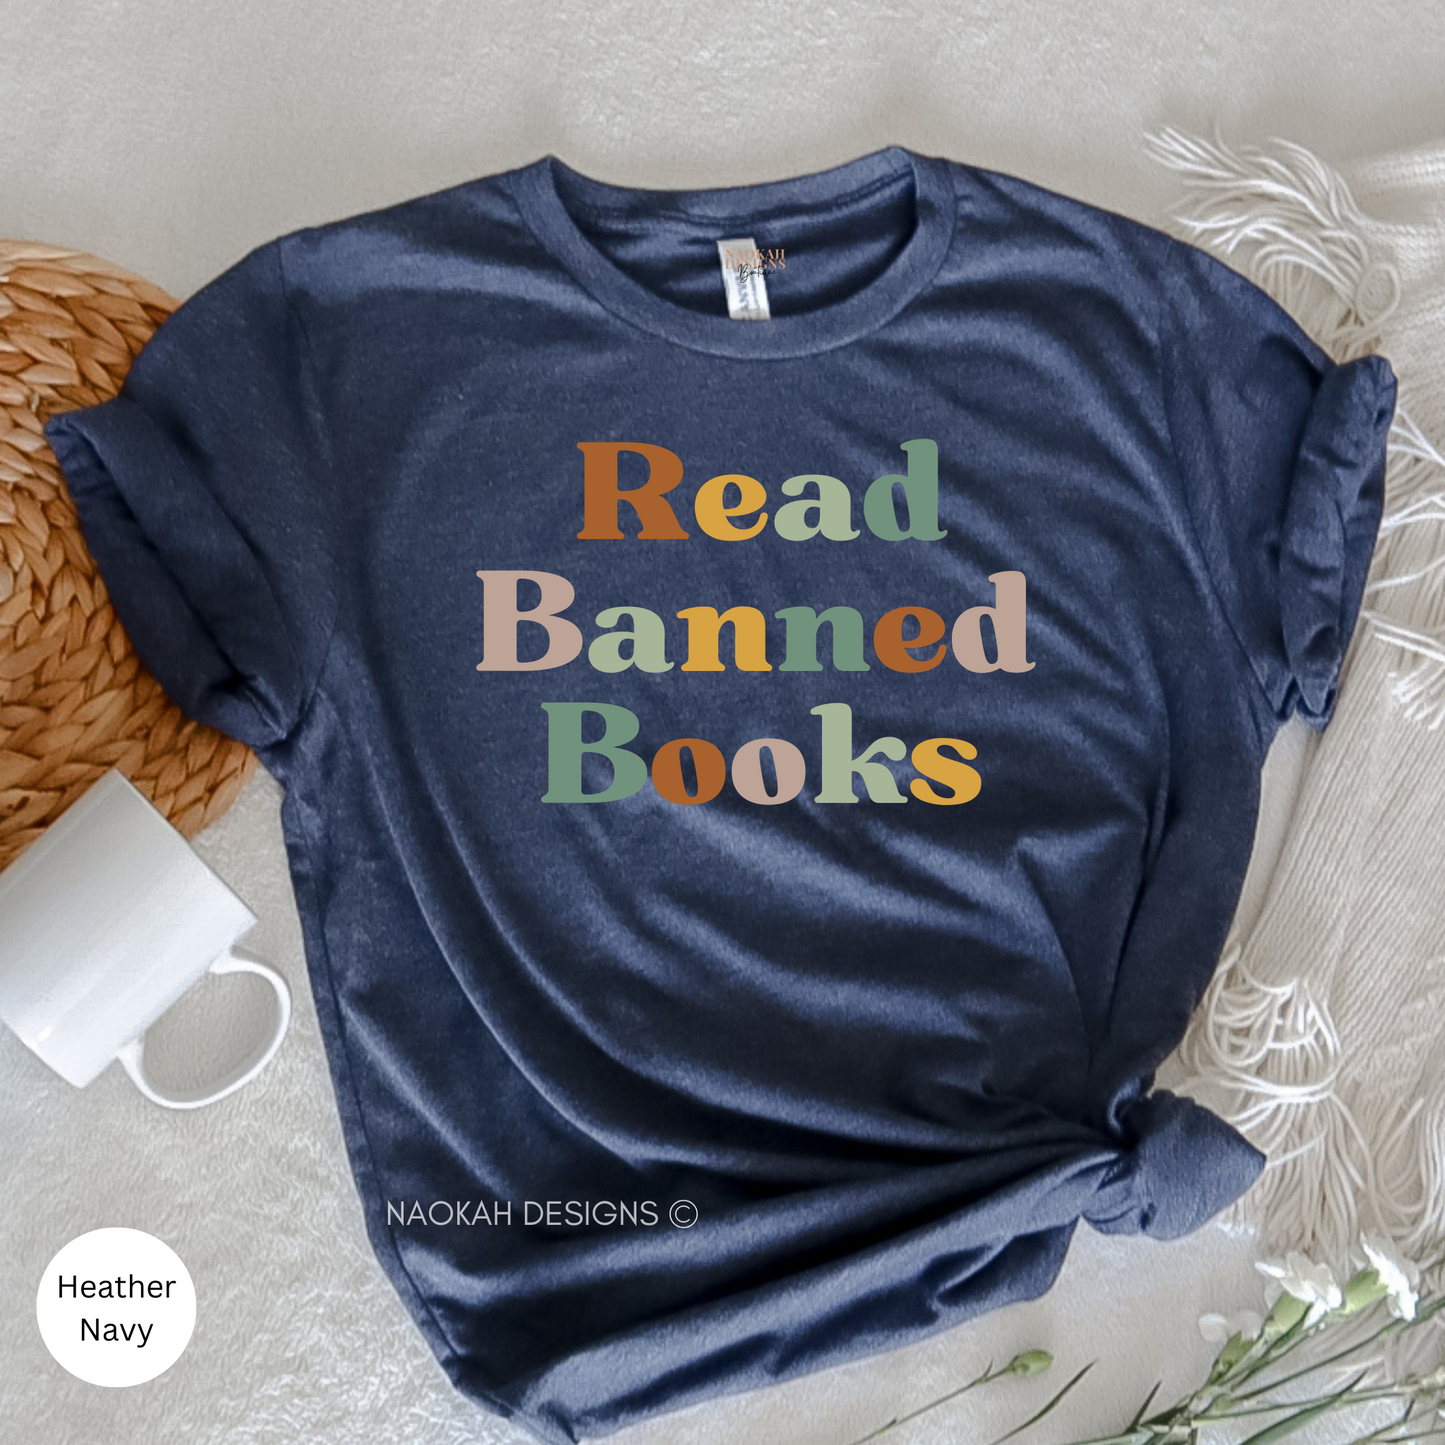 read banned books shirt, librarian shirt, book club shirt, bookish shirt, try reading book instead of banning them, literature shirt